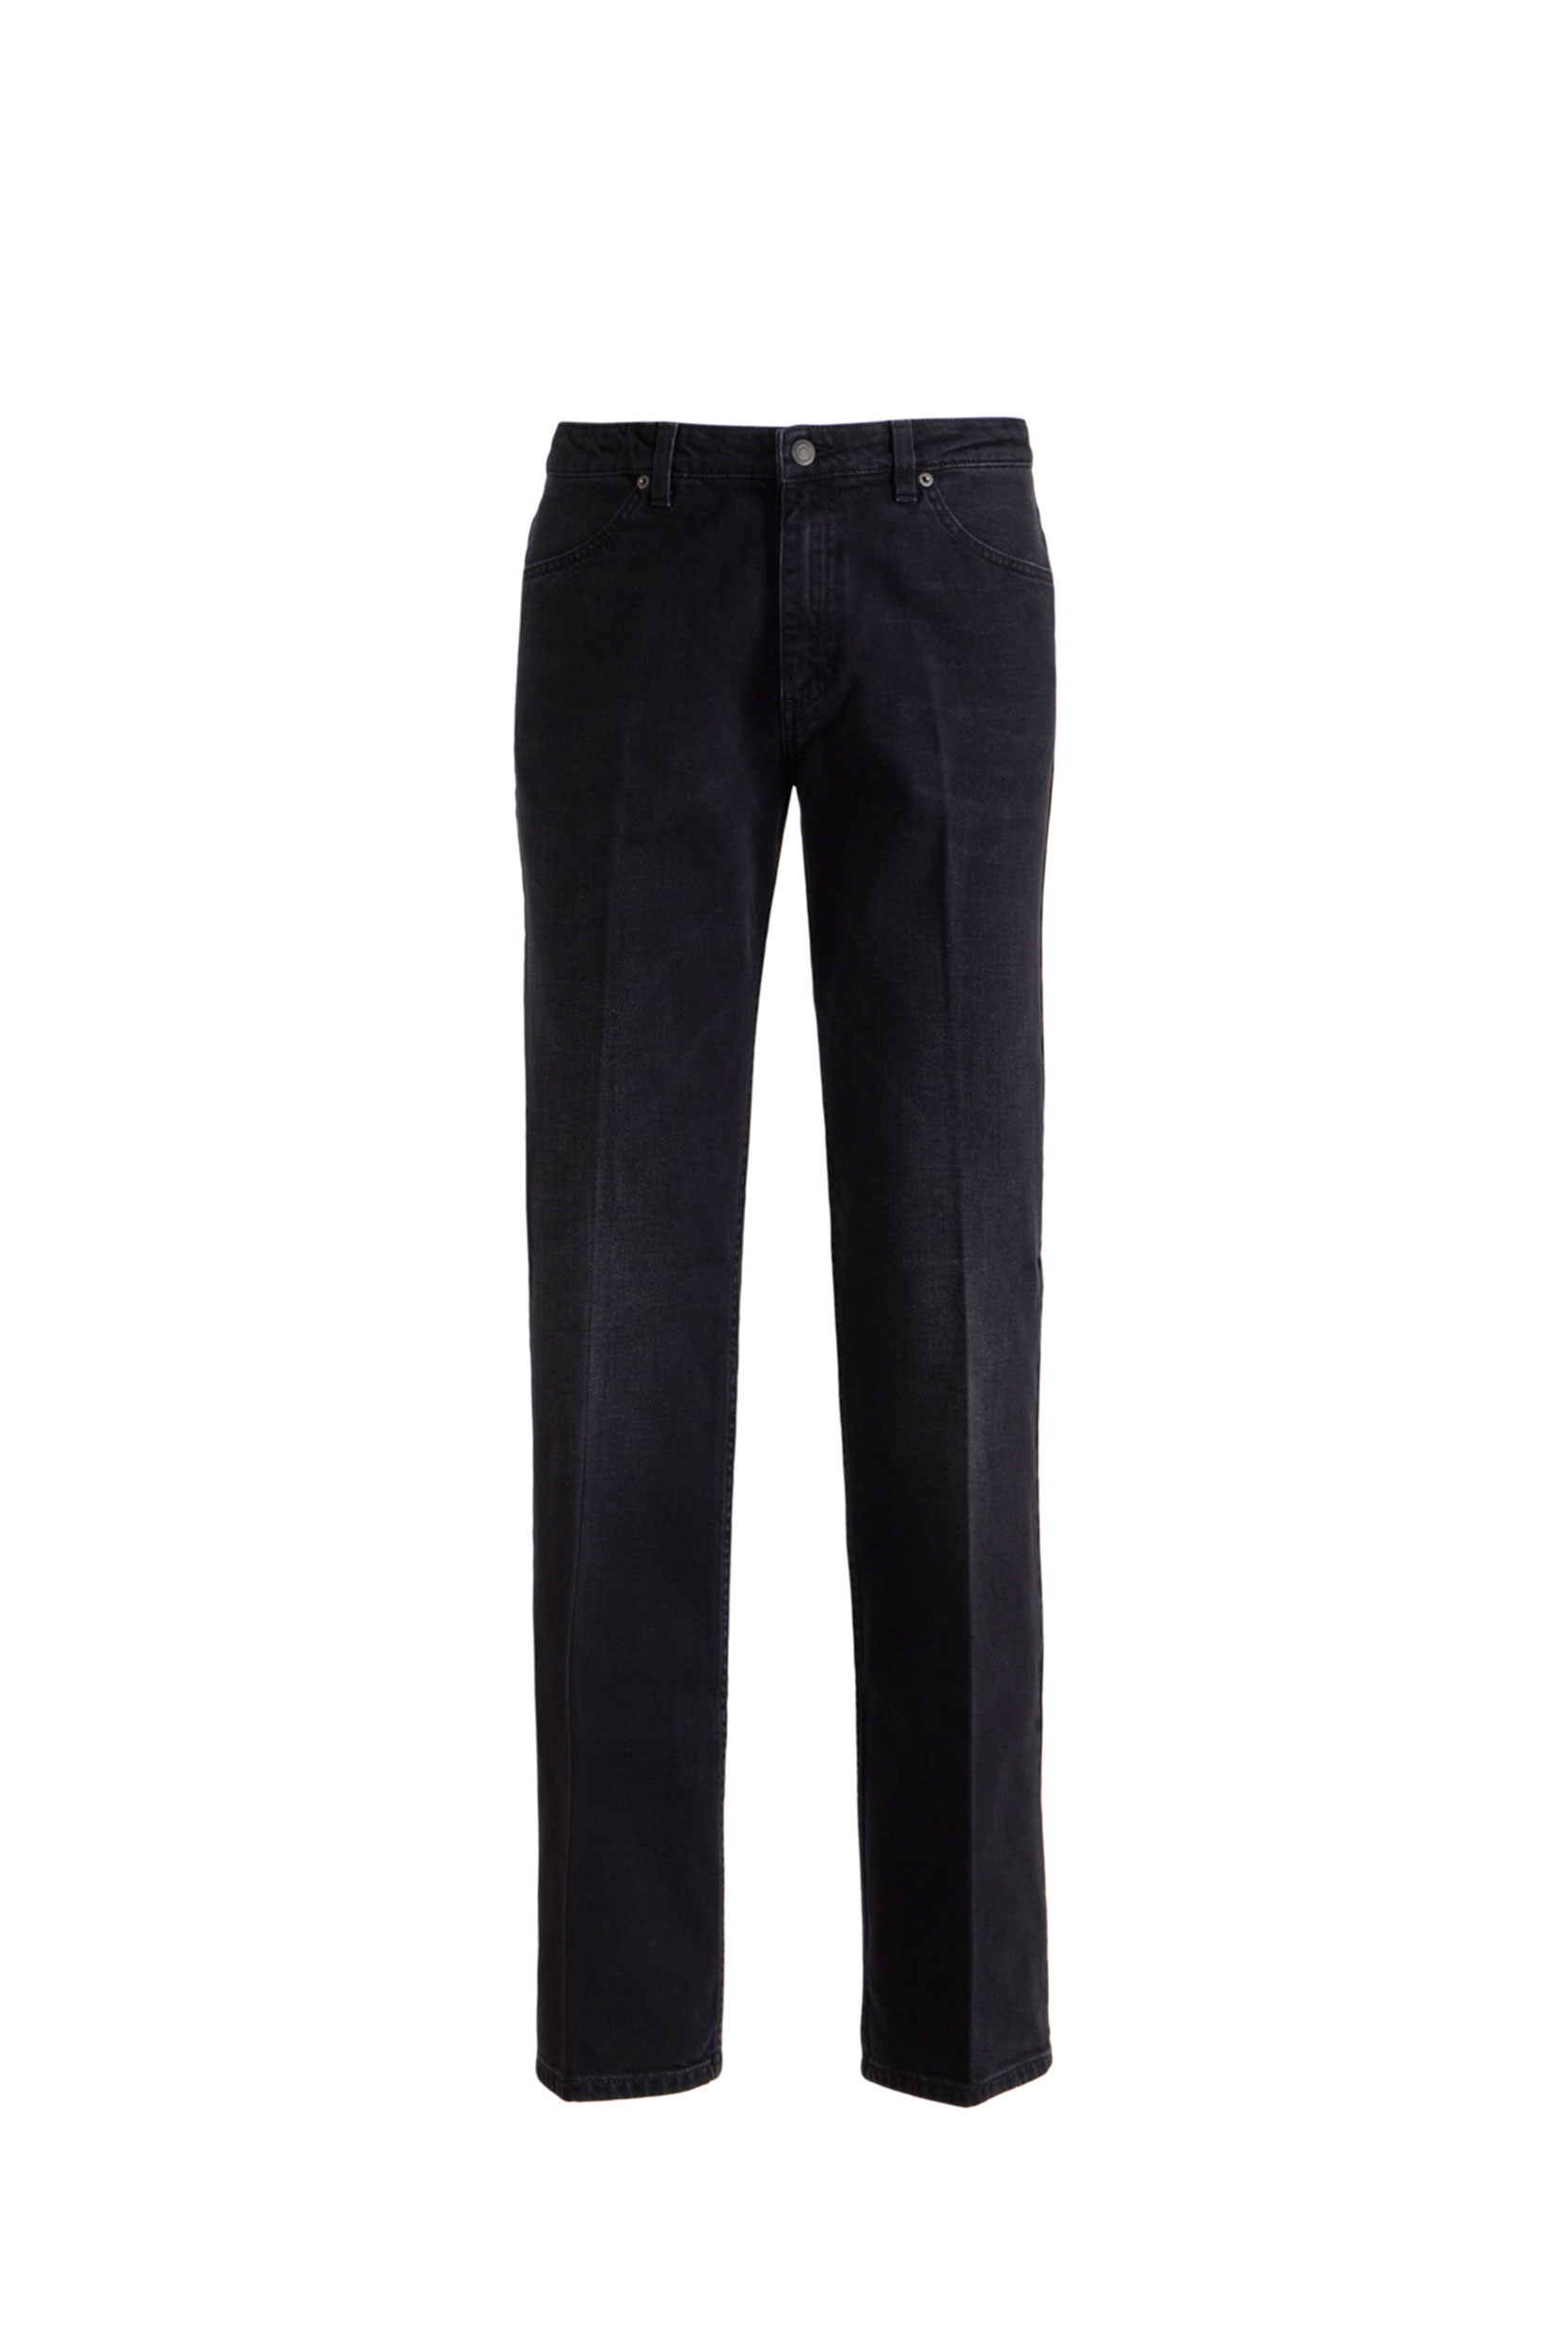 Wild Thing Black Coreva 100% Compostable Stretch Denim Fabric Straight  Leg/70's Fit Jeans - Barbanera